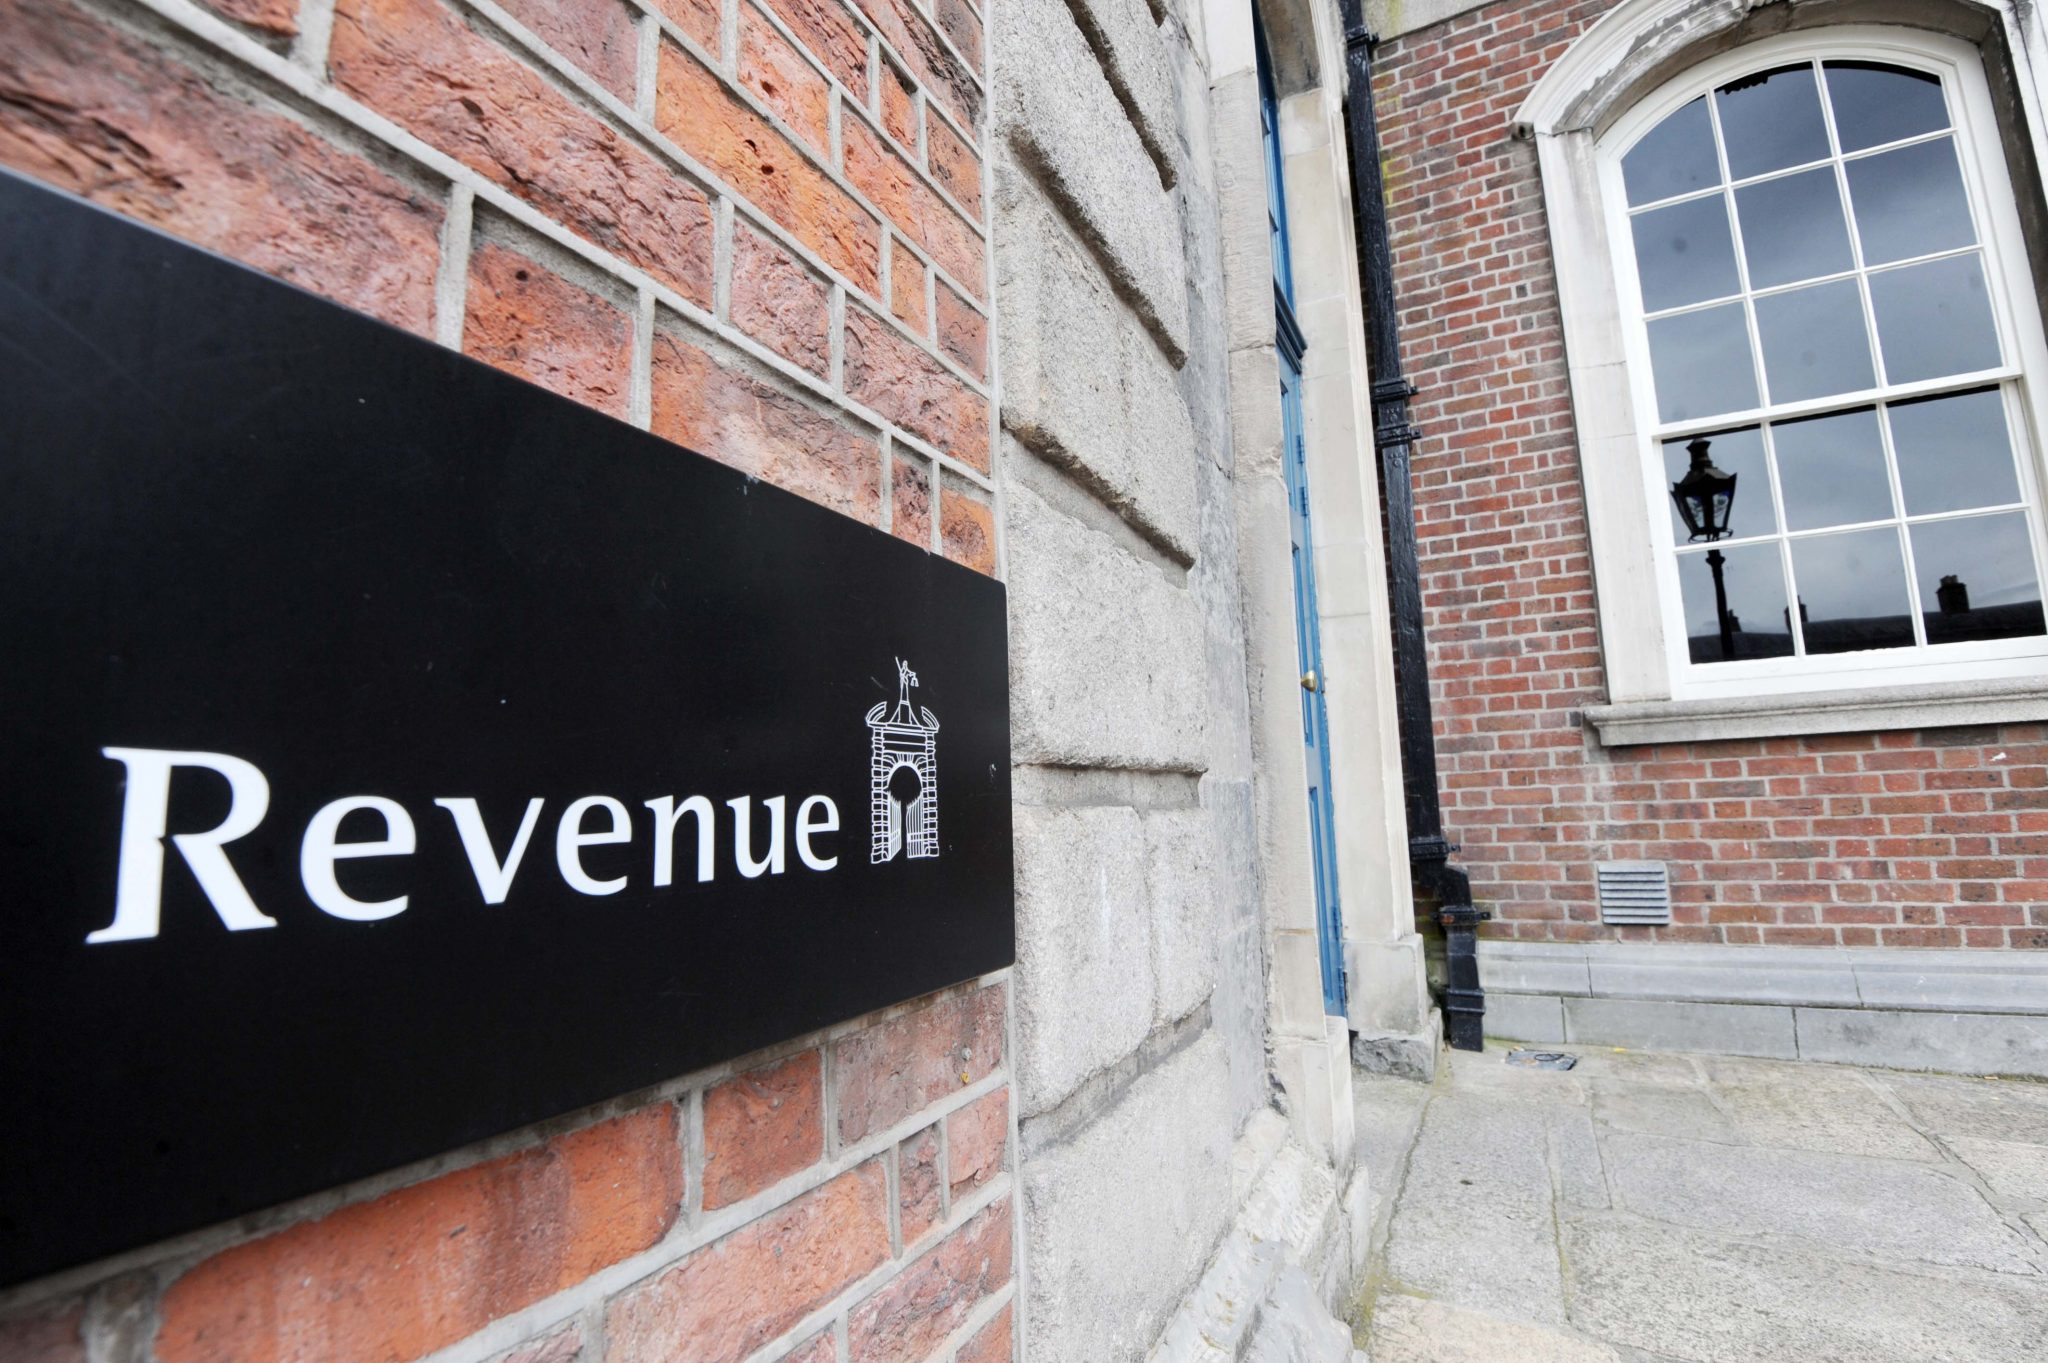 Revenue headquarters in Dublin